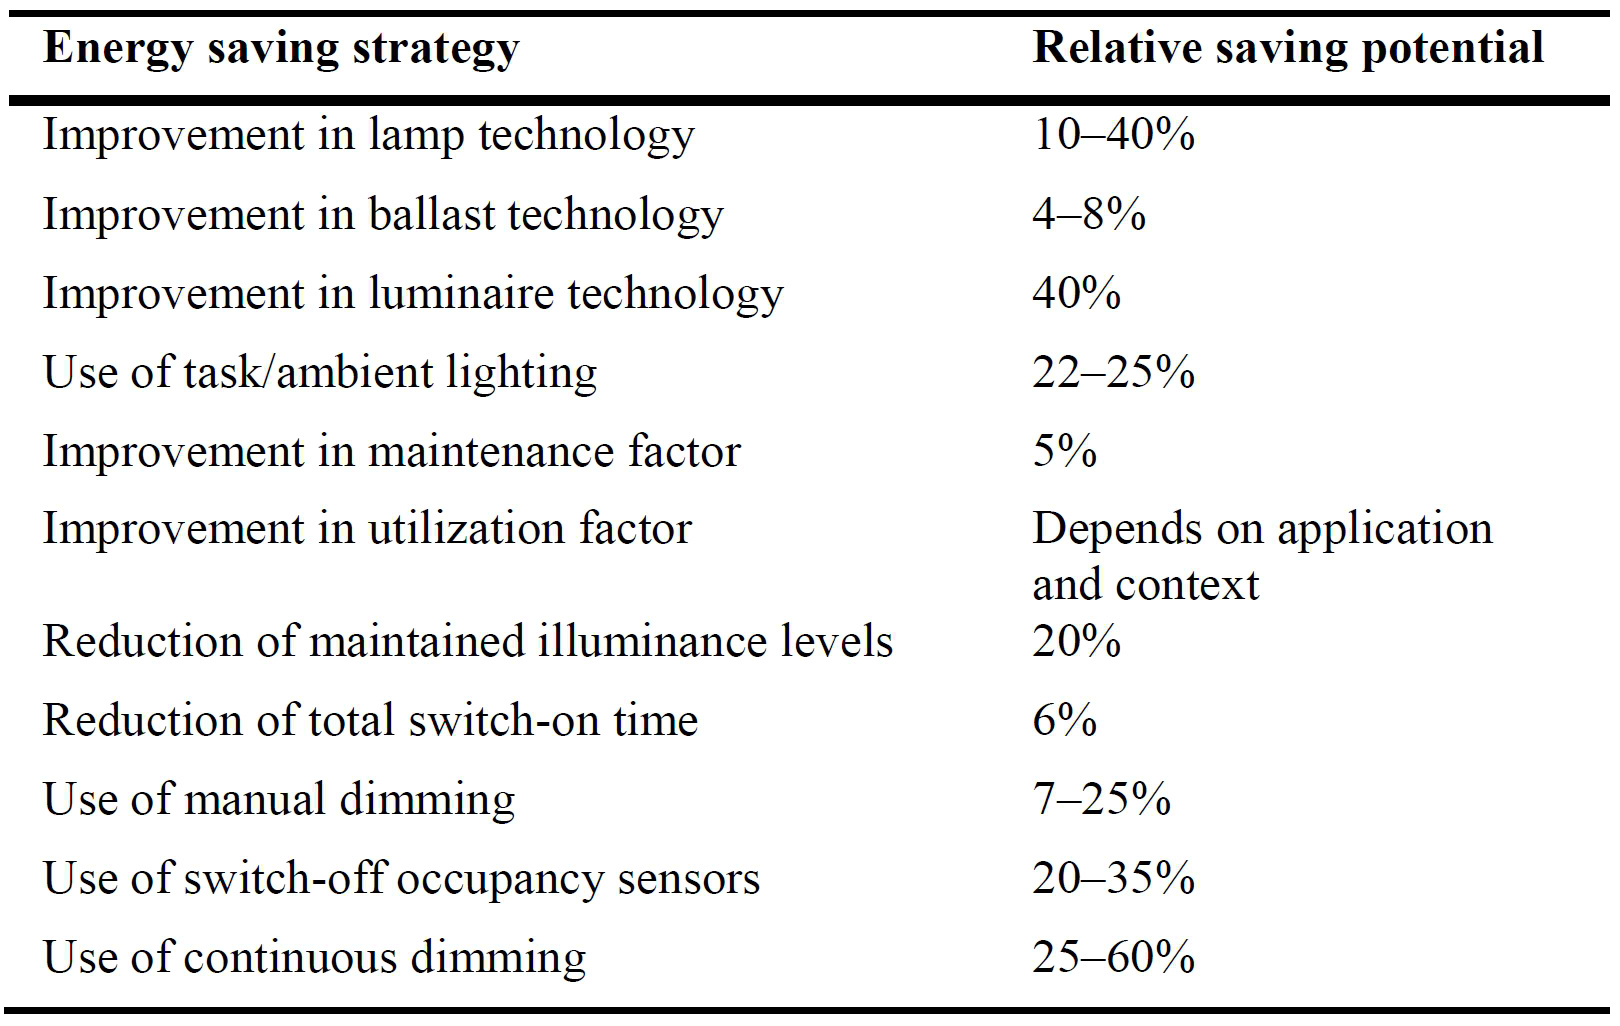 Energy saving strategies and relative energy saving potential [5].